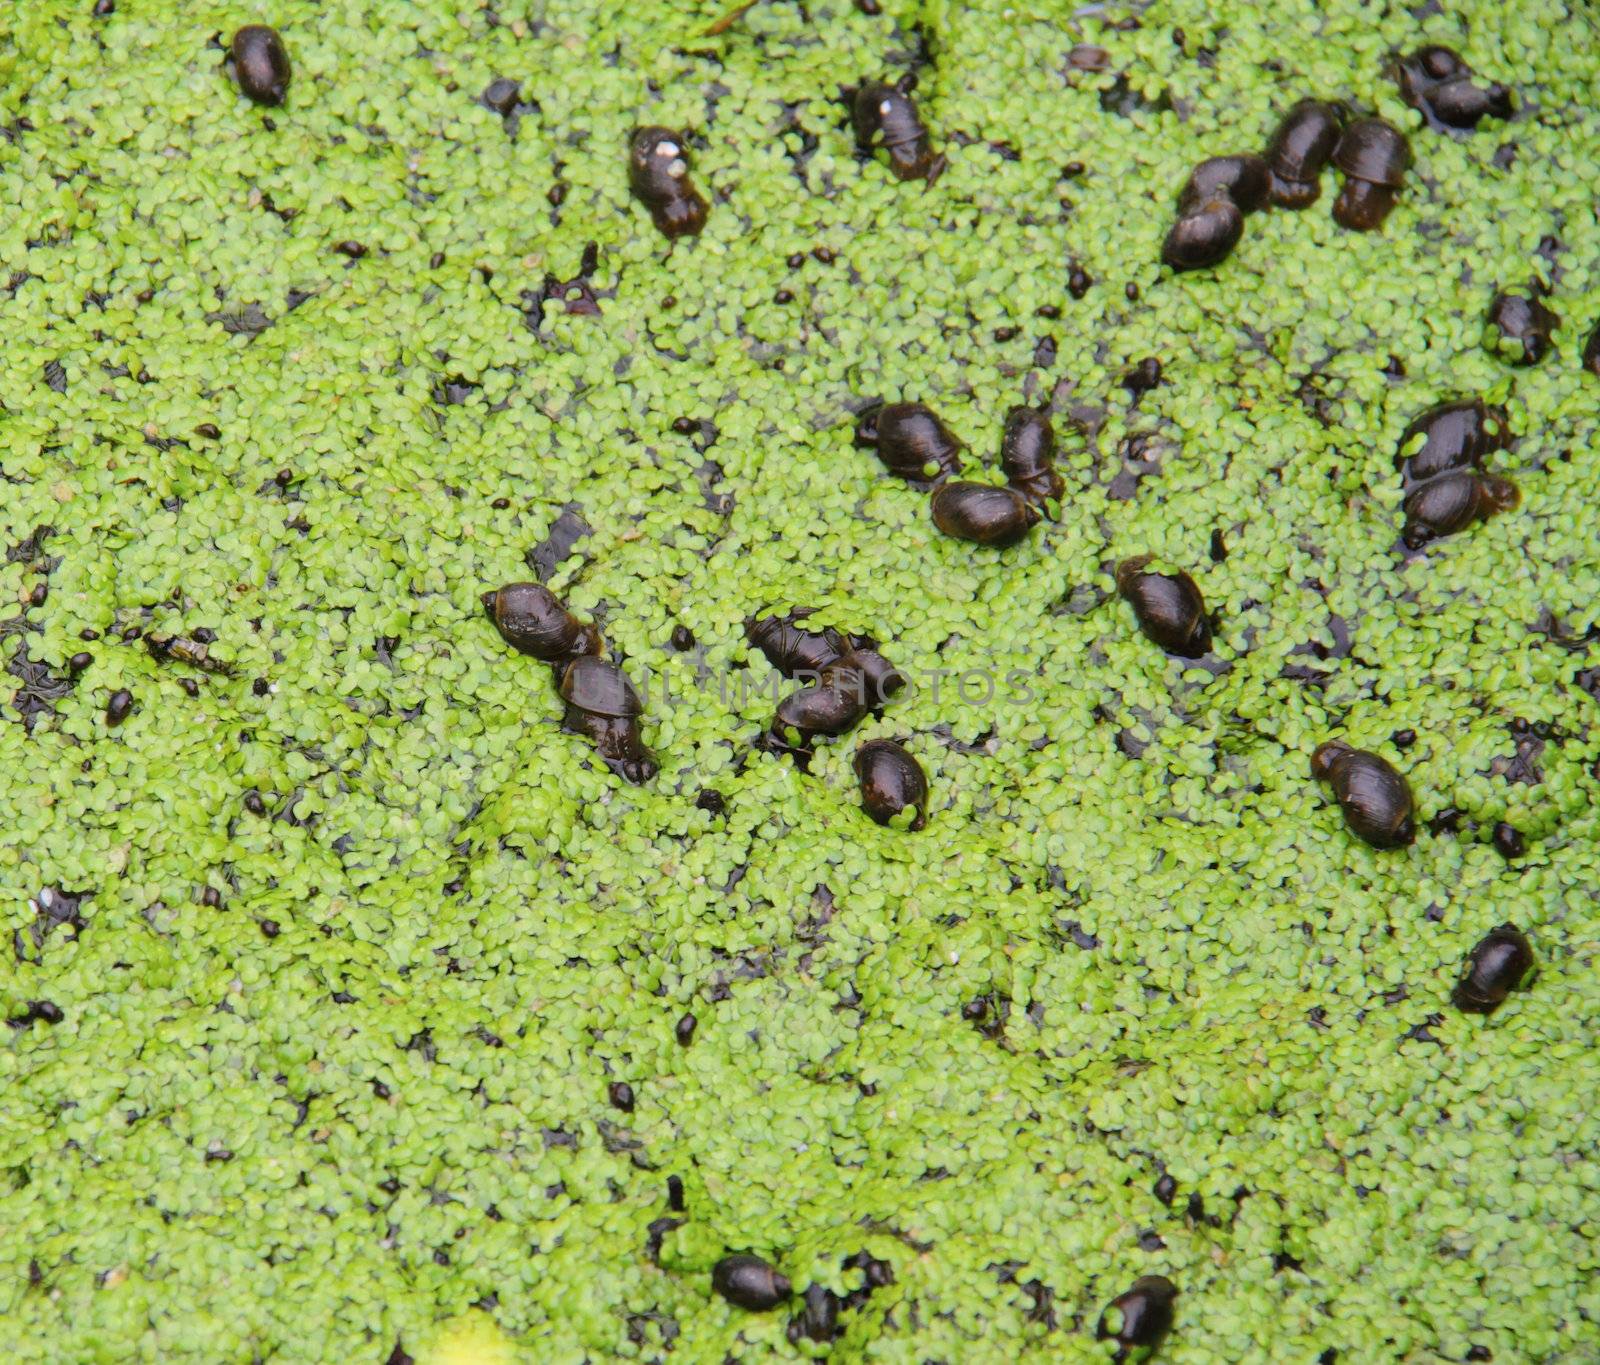 snails on duckweed